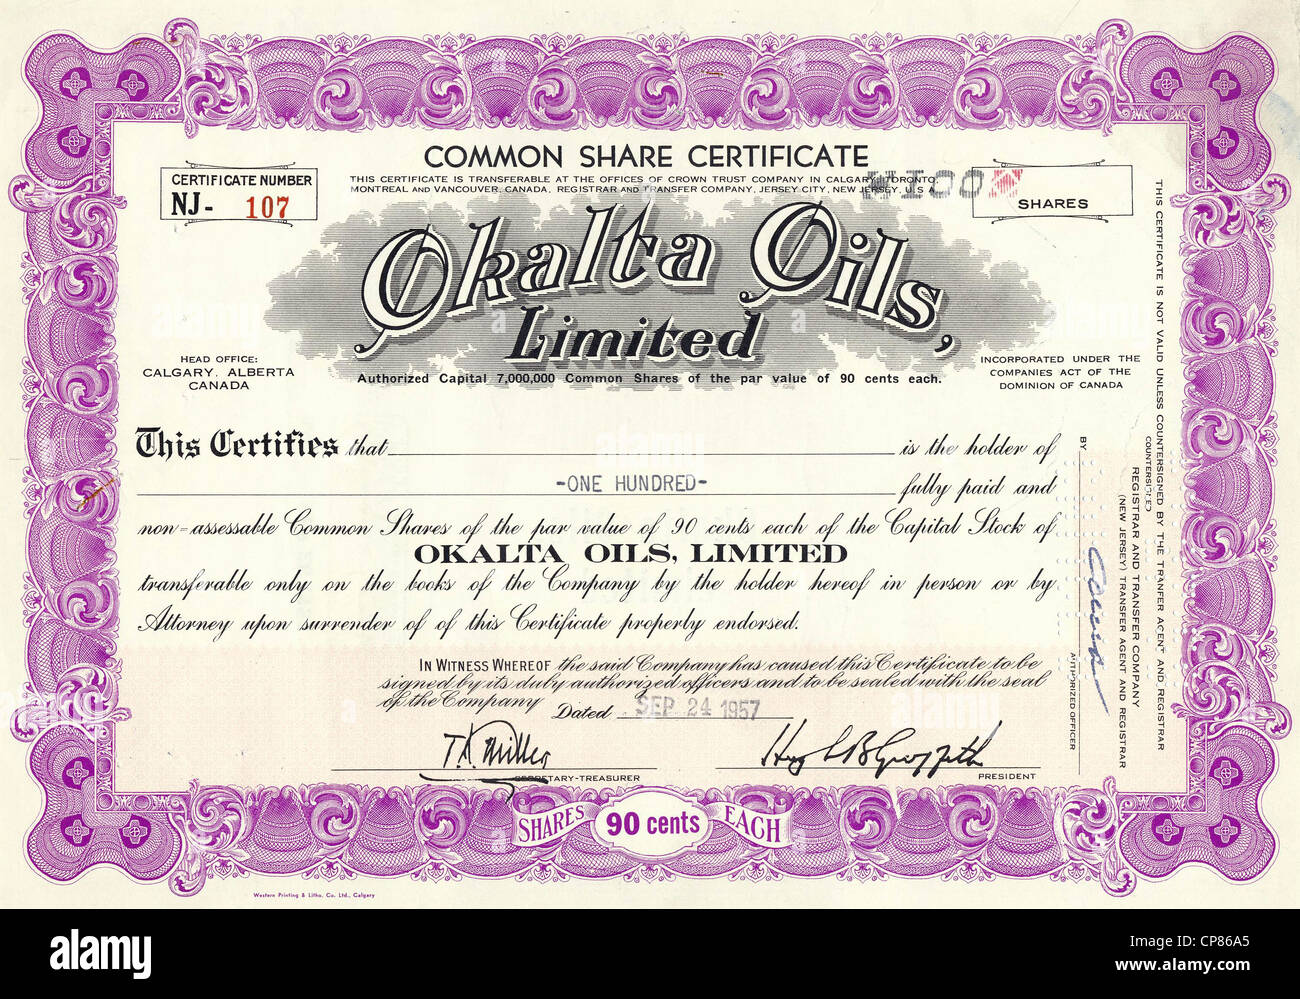 Historical stock certificate of an oil and gas company, Okalta Oils Limited, Calgary, Alberta, Canada, 1957, Wertpapier, histori Stock Photo